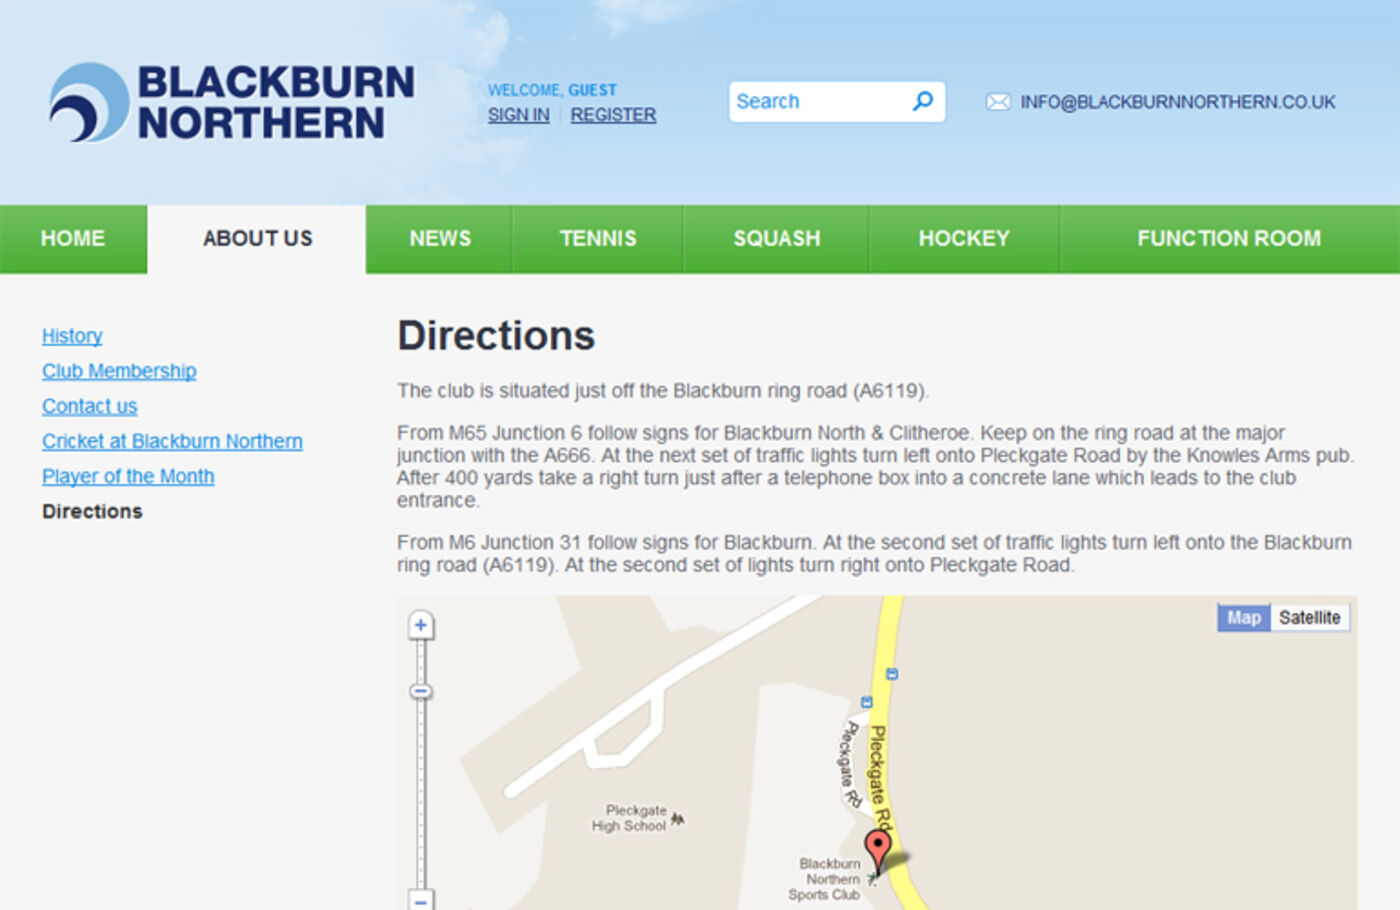 Blackburn Northern Sports Club (2011) Directions